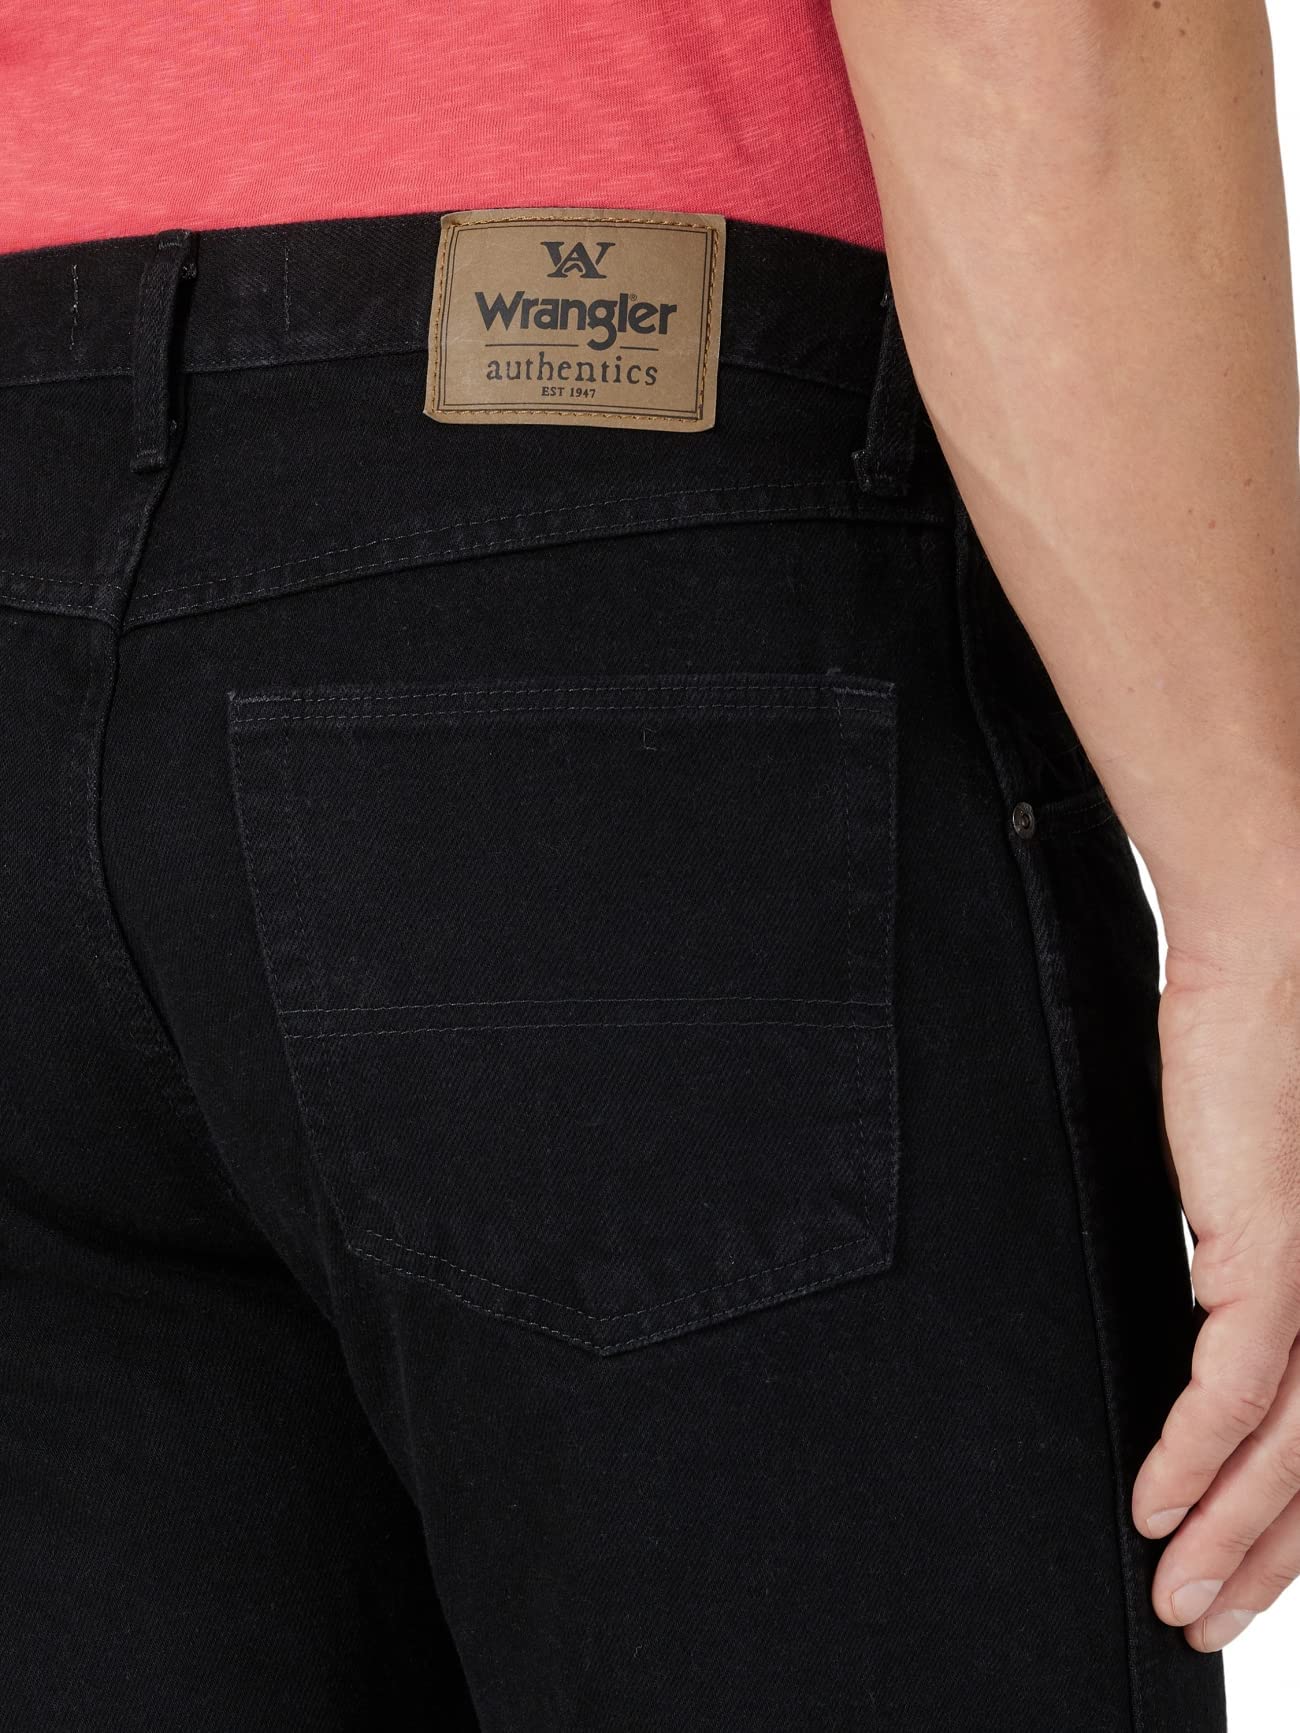 Wrangler Authentics Men's Classic 5-Pocket Regular Fit Cotton Jean, Black, 30W x 30L